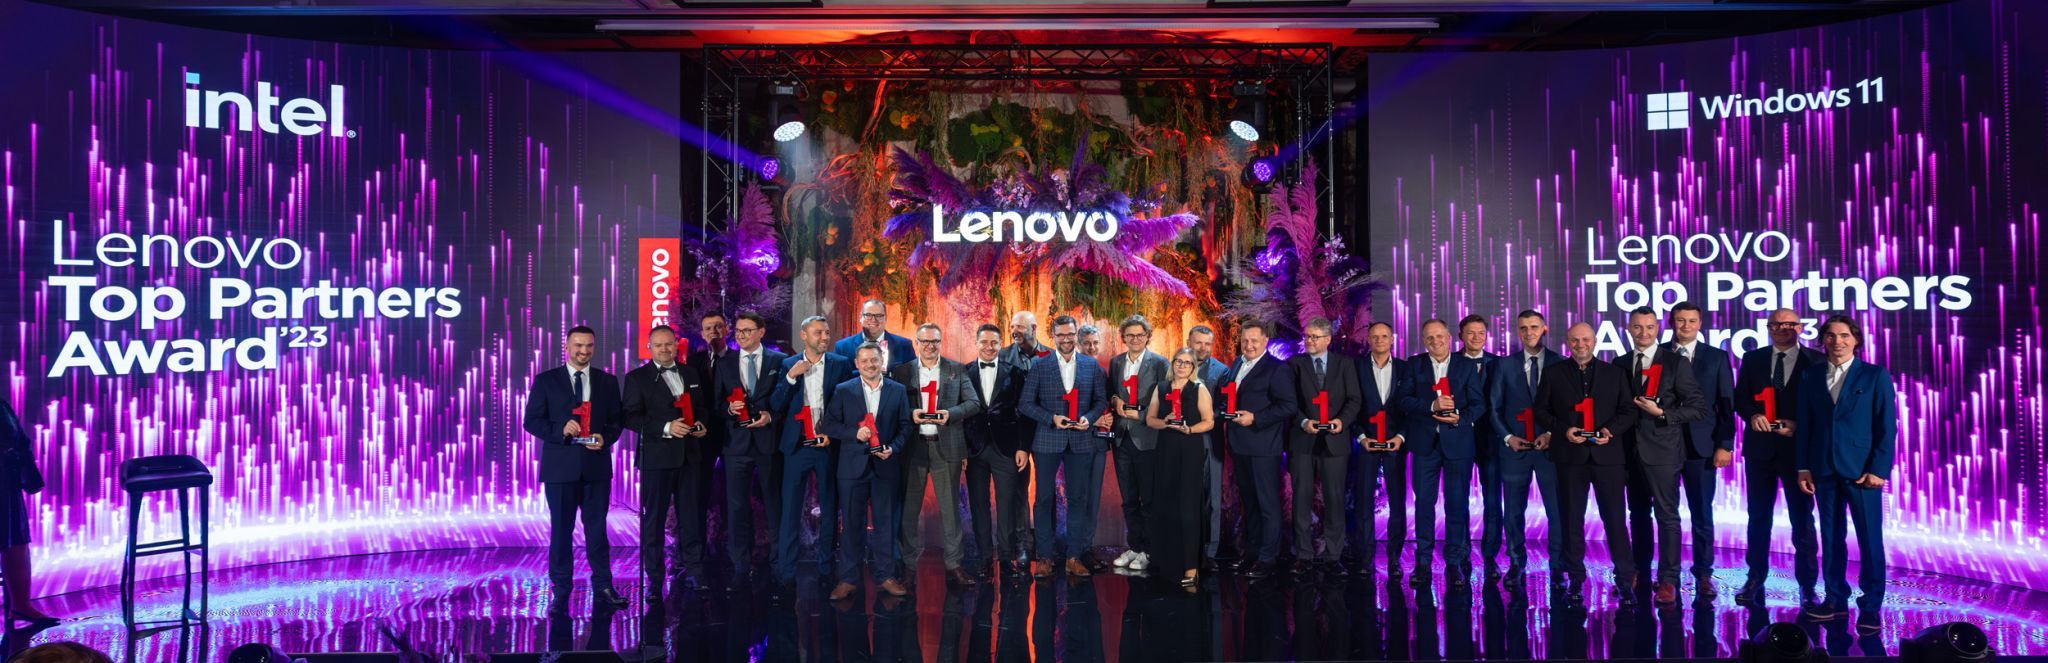 Top Partners Award: święto partnerów Lenovo!